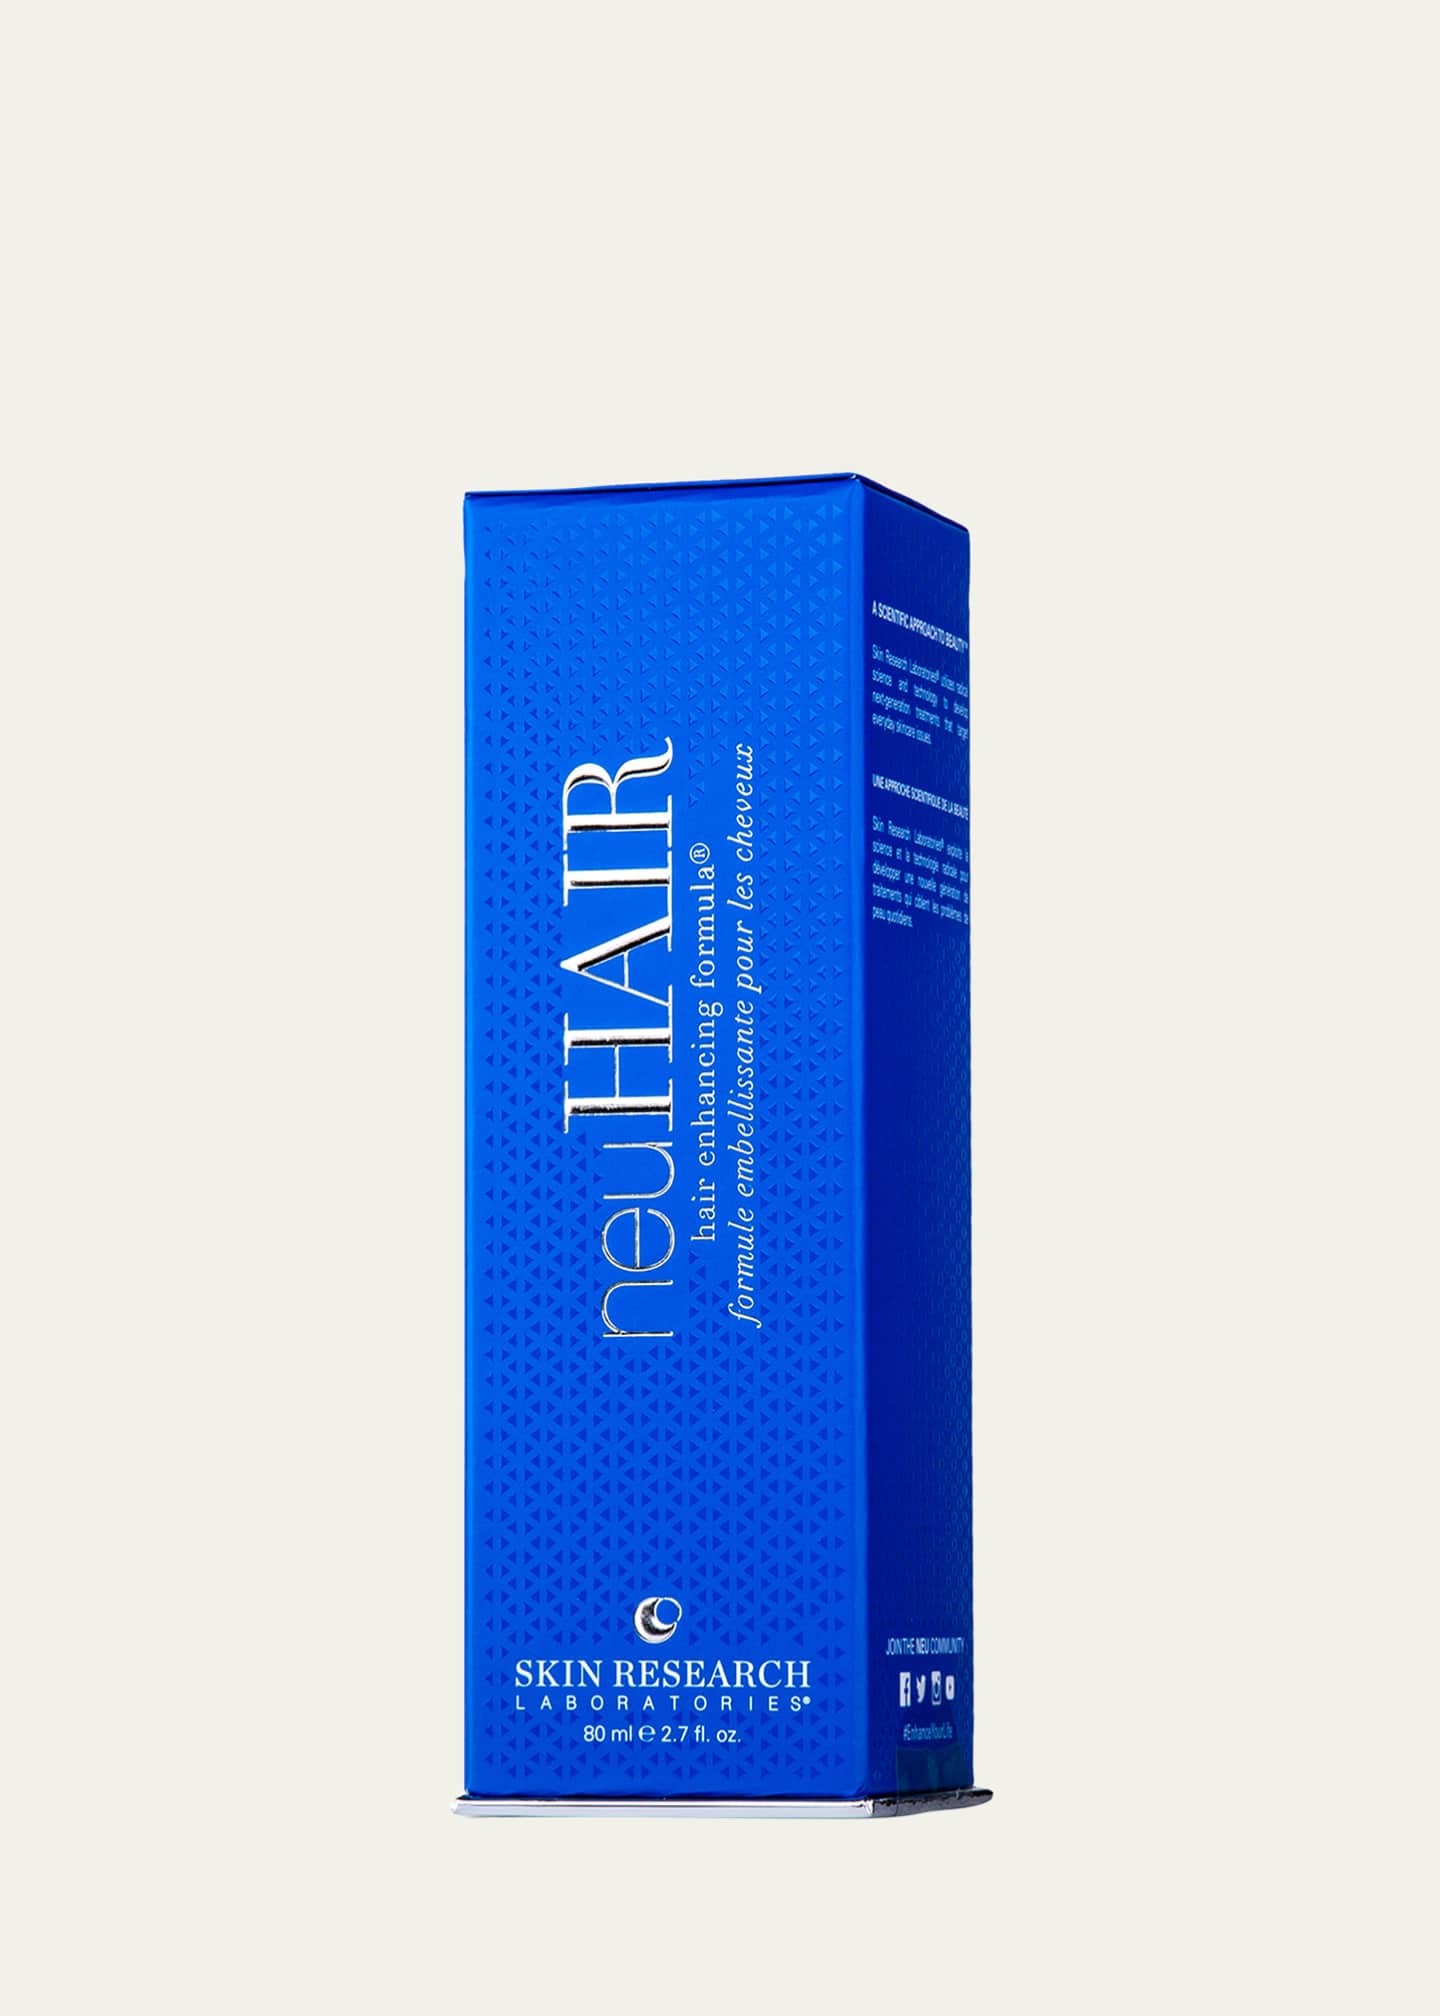 NeuLash by Skin Research Laboratories 2.7 oz. Hair Enhancing Formula Image 3 of 5